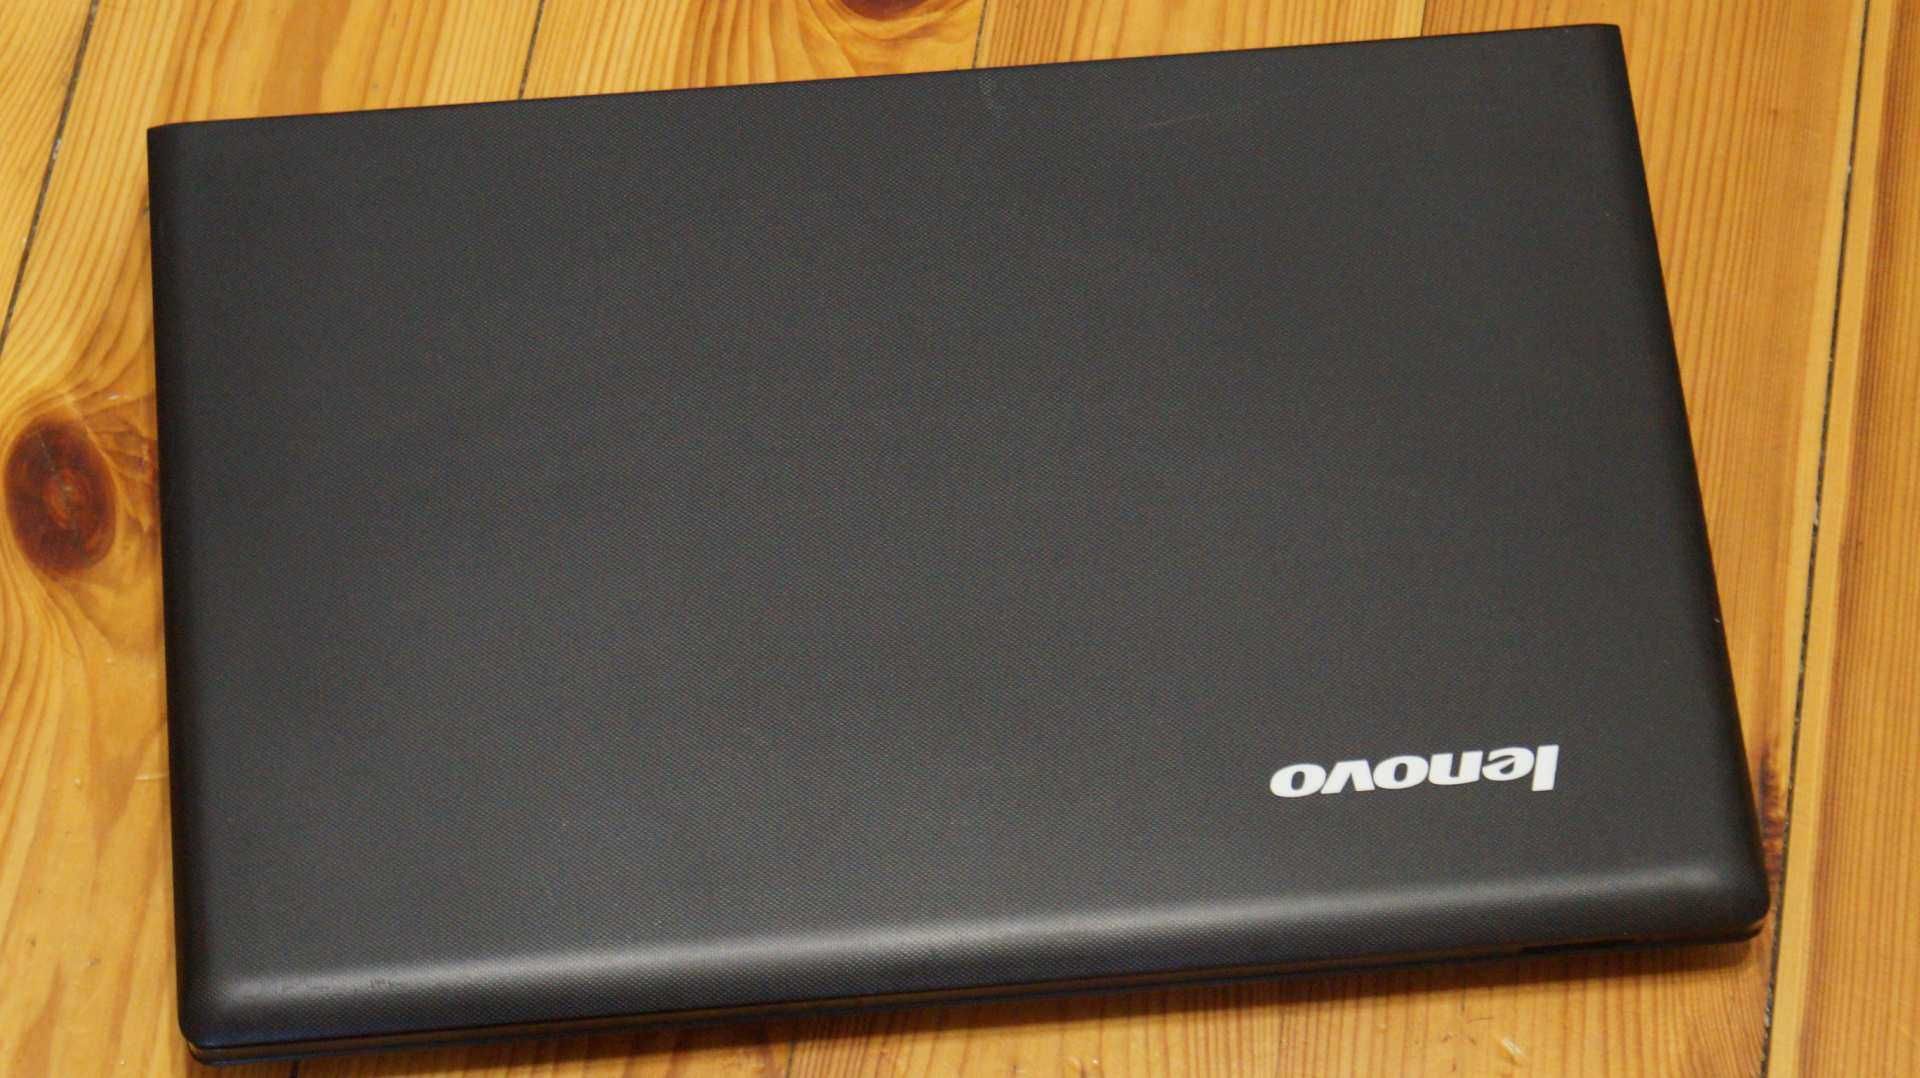 Ноутбук Lenovo G500 Pentium 2020m/8Gb/120Gb SSD/АКБ 2г